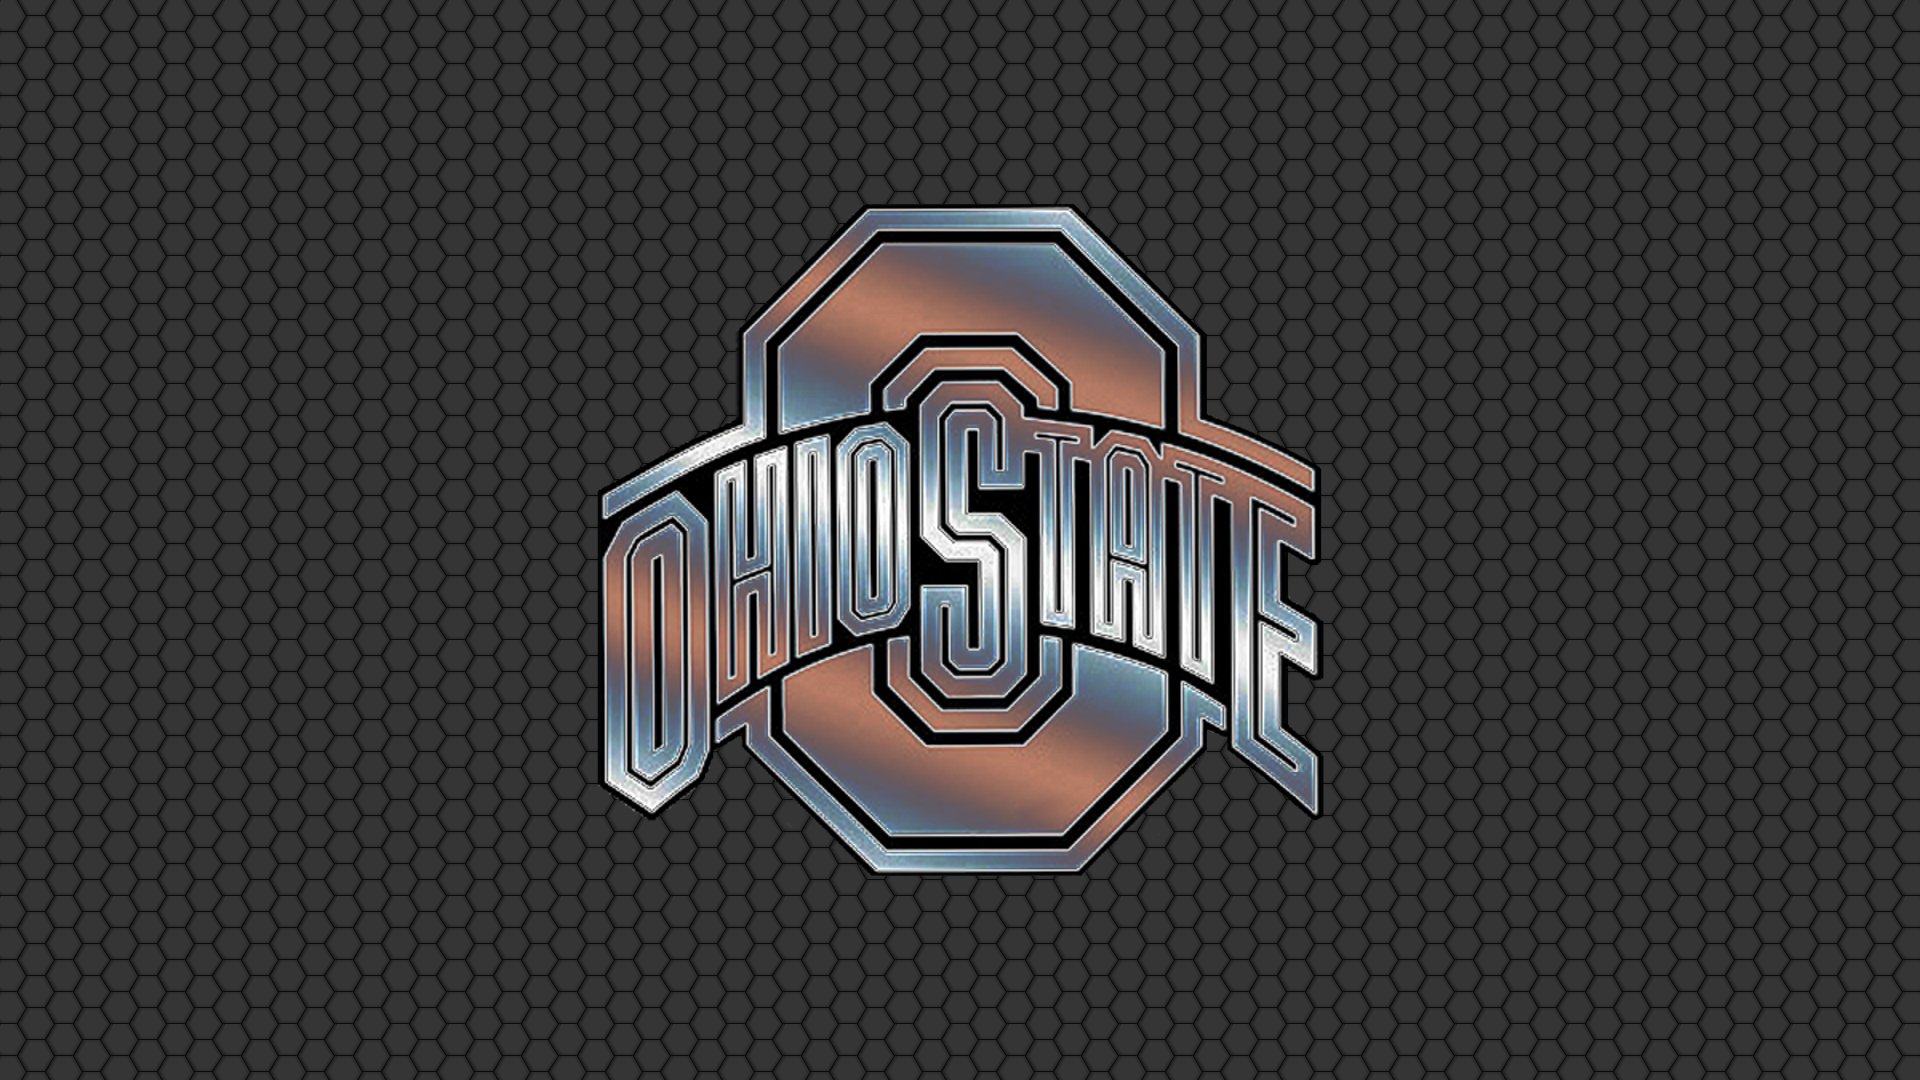 Osu Wallpaper Ohio State Desktop